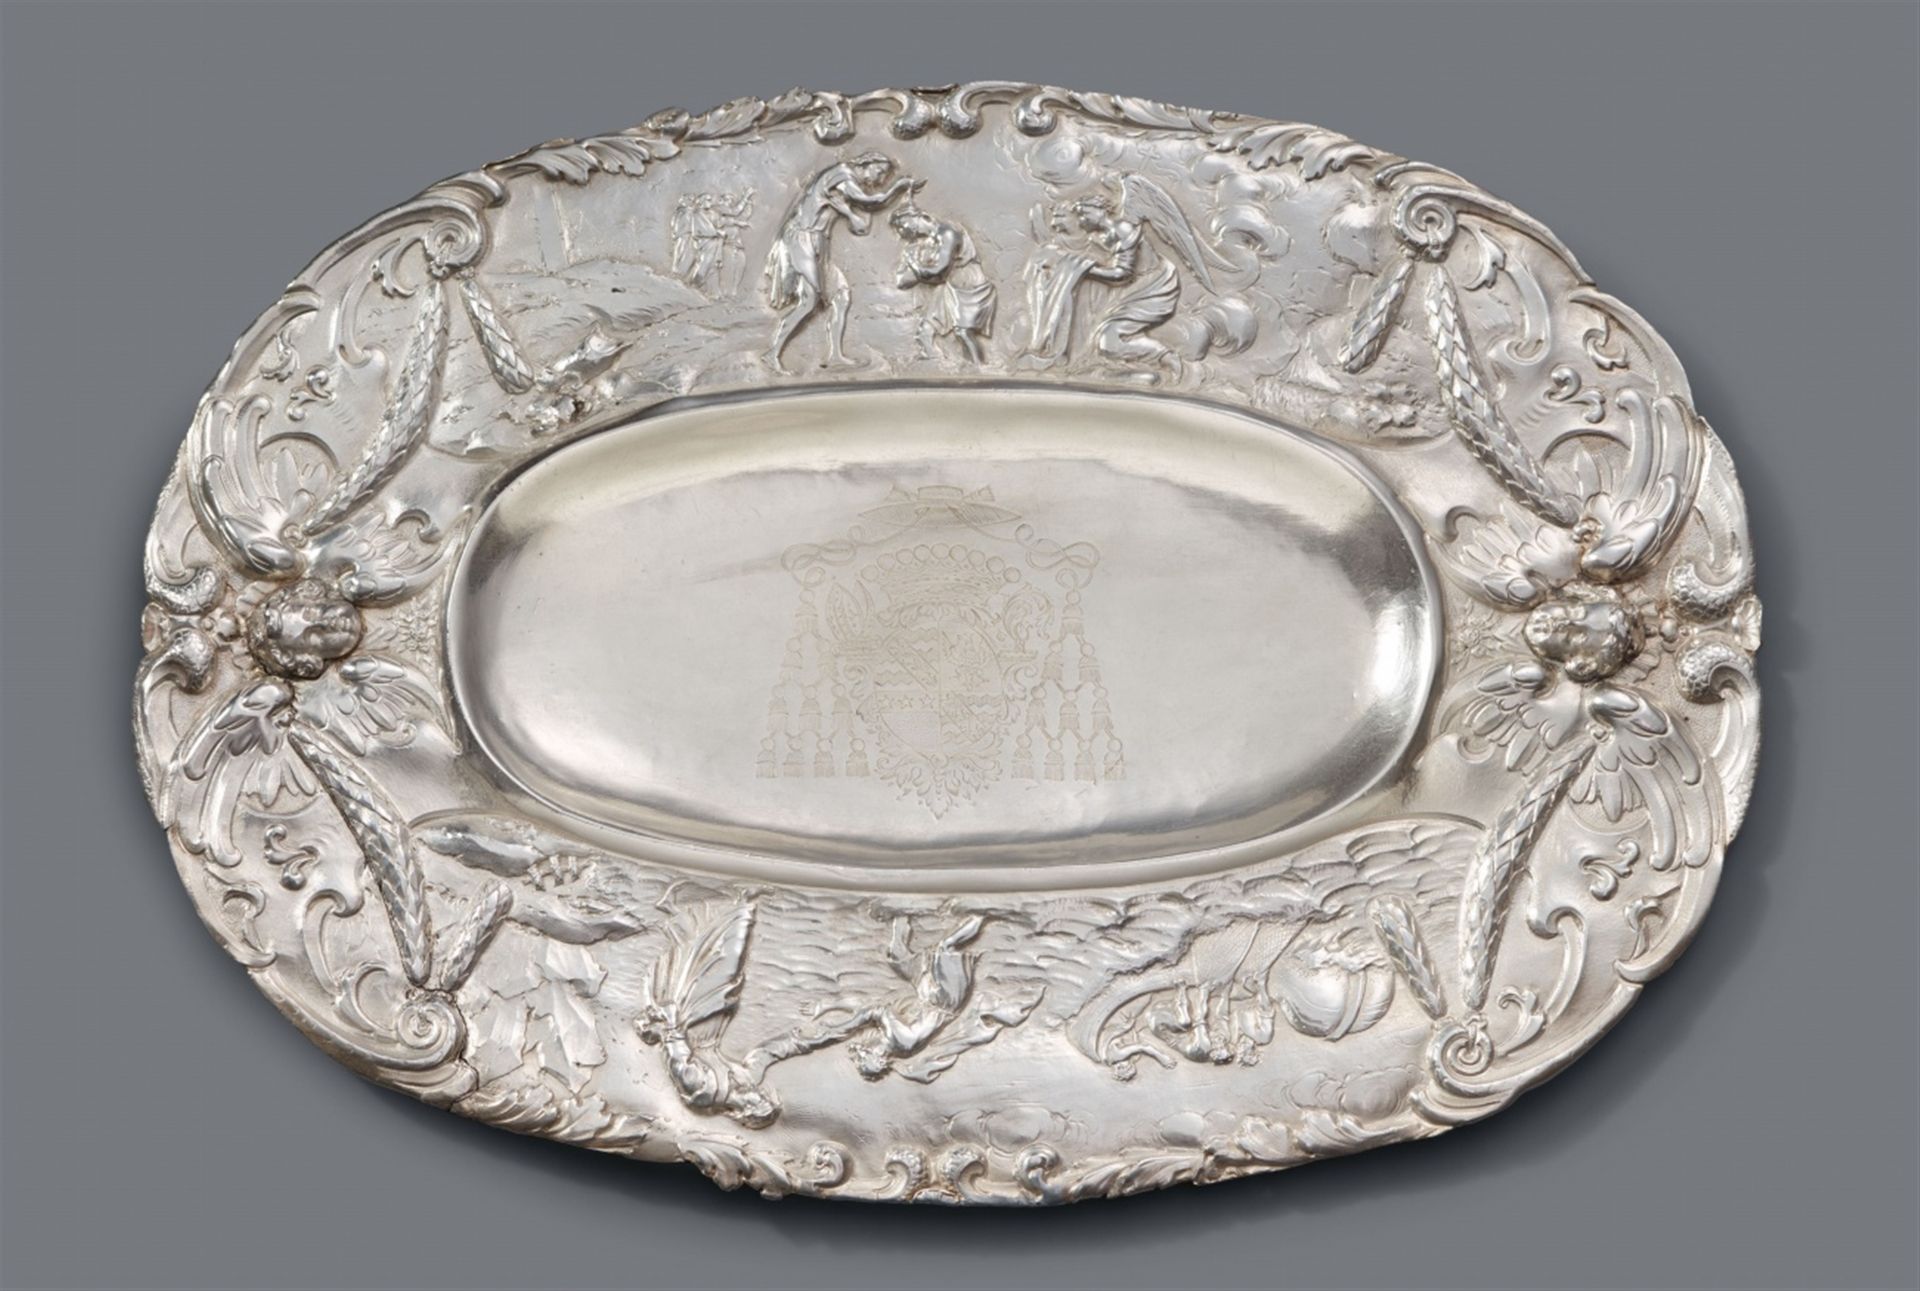 An early Parisian silver basin